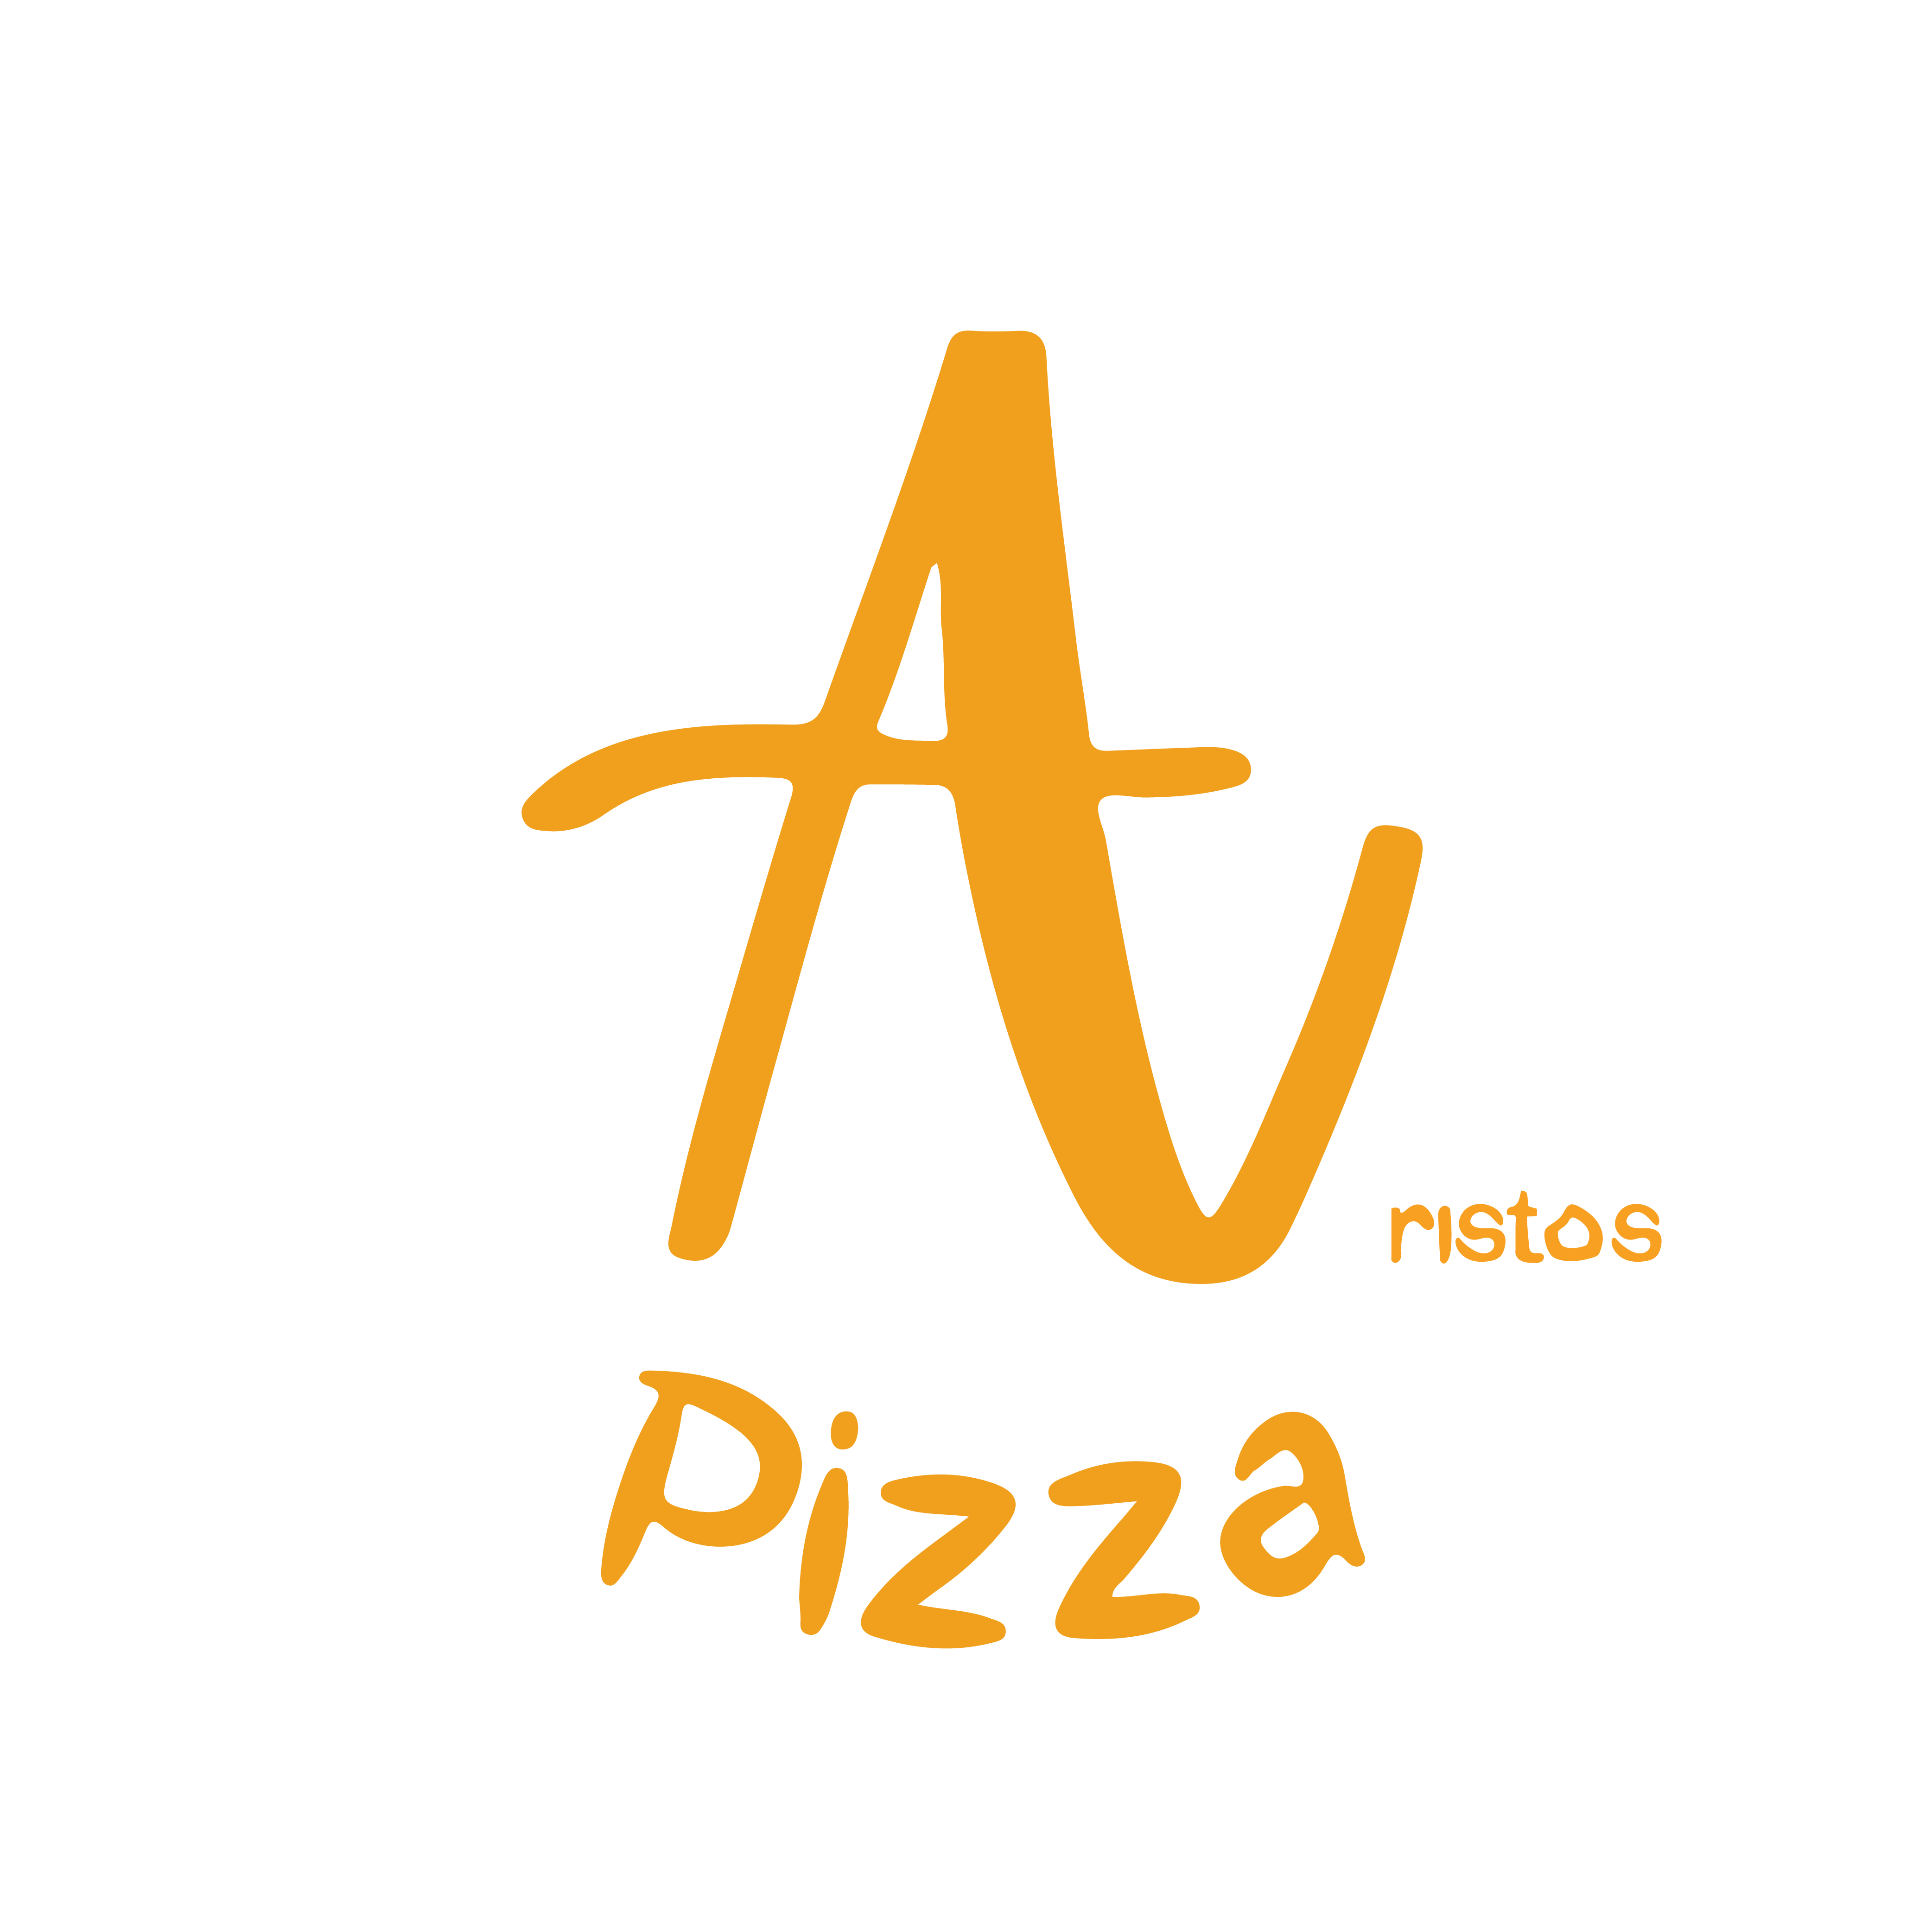 Aristos Pizza Place